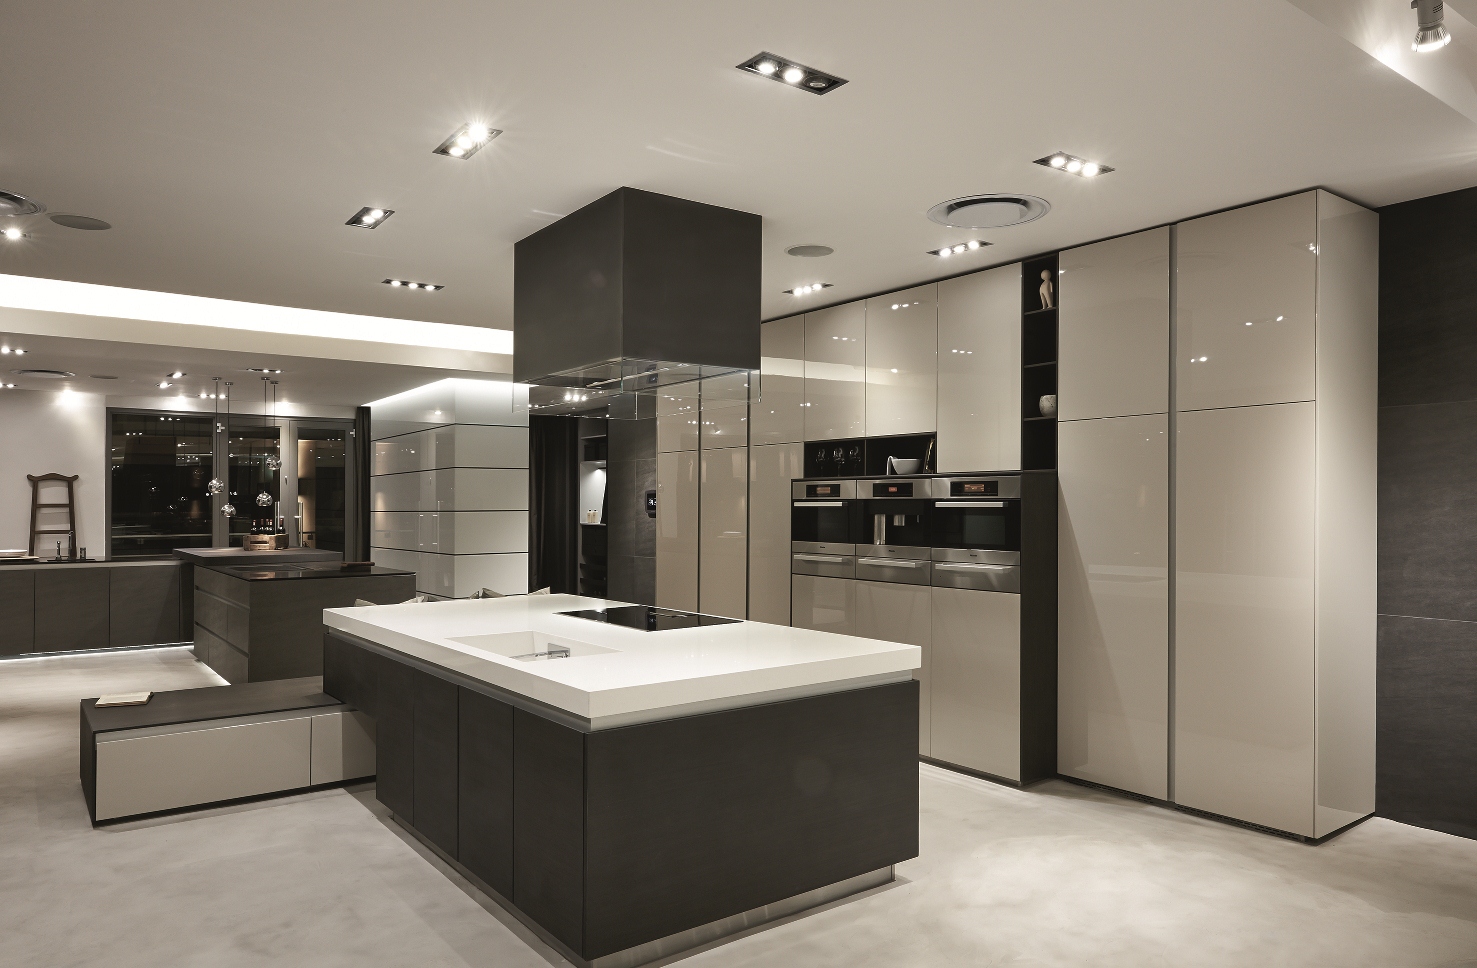 kitchen showroom design ideas - Home Decor Ideas